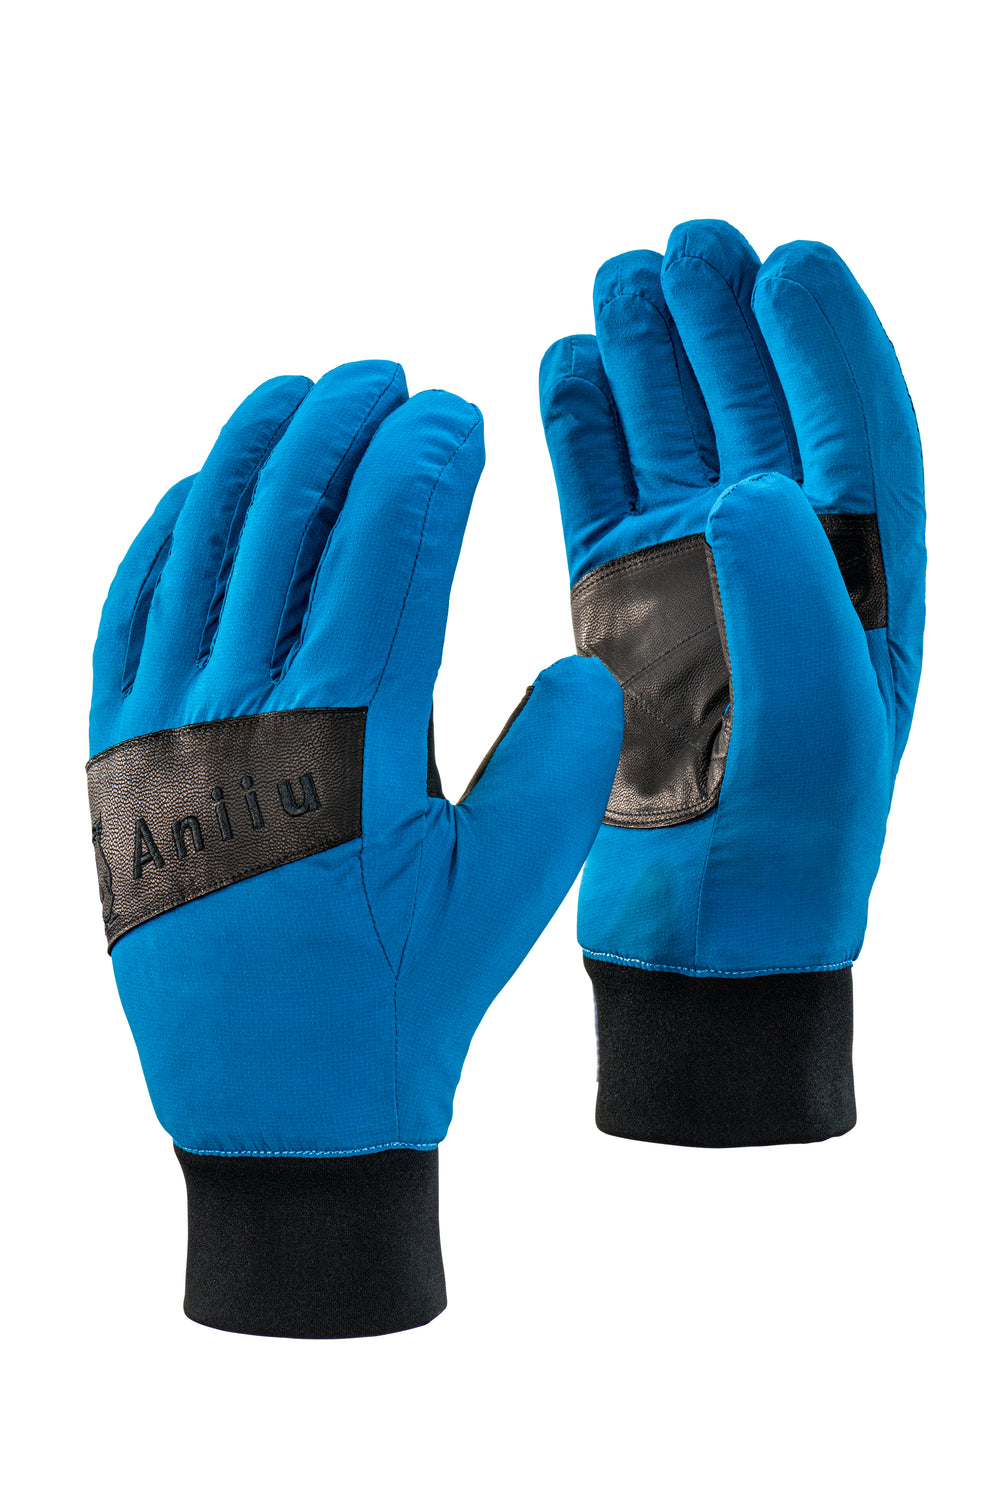 Ossa™ SL Glove